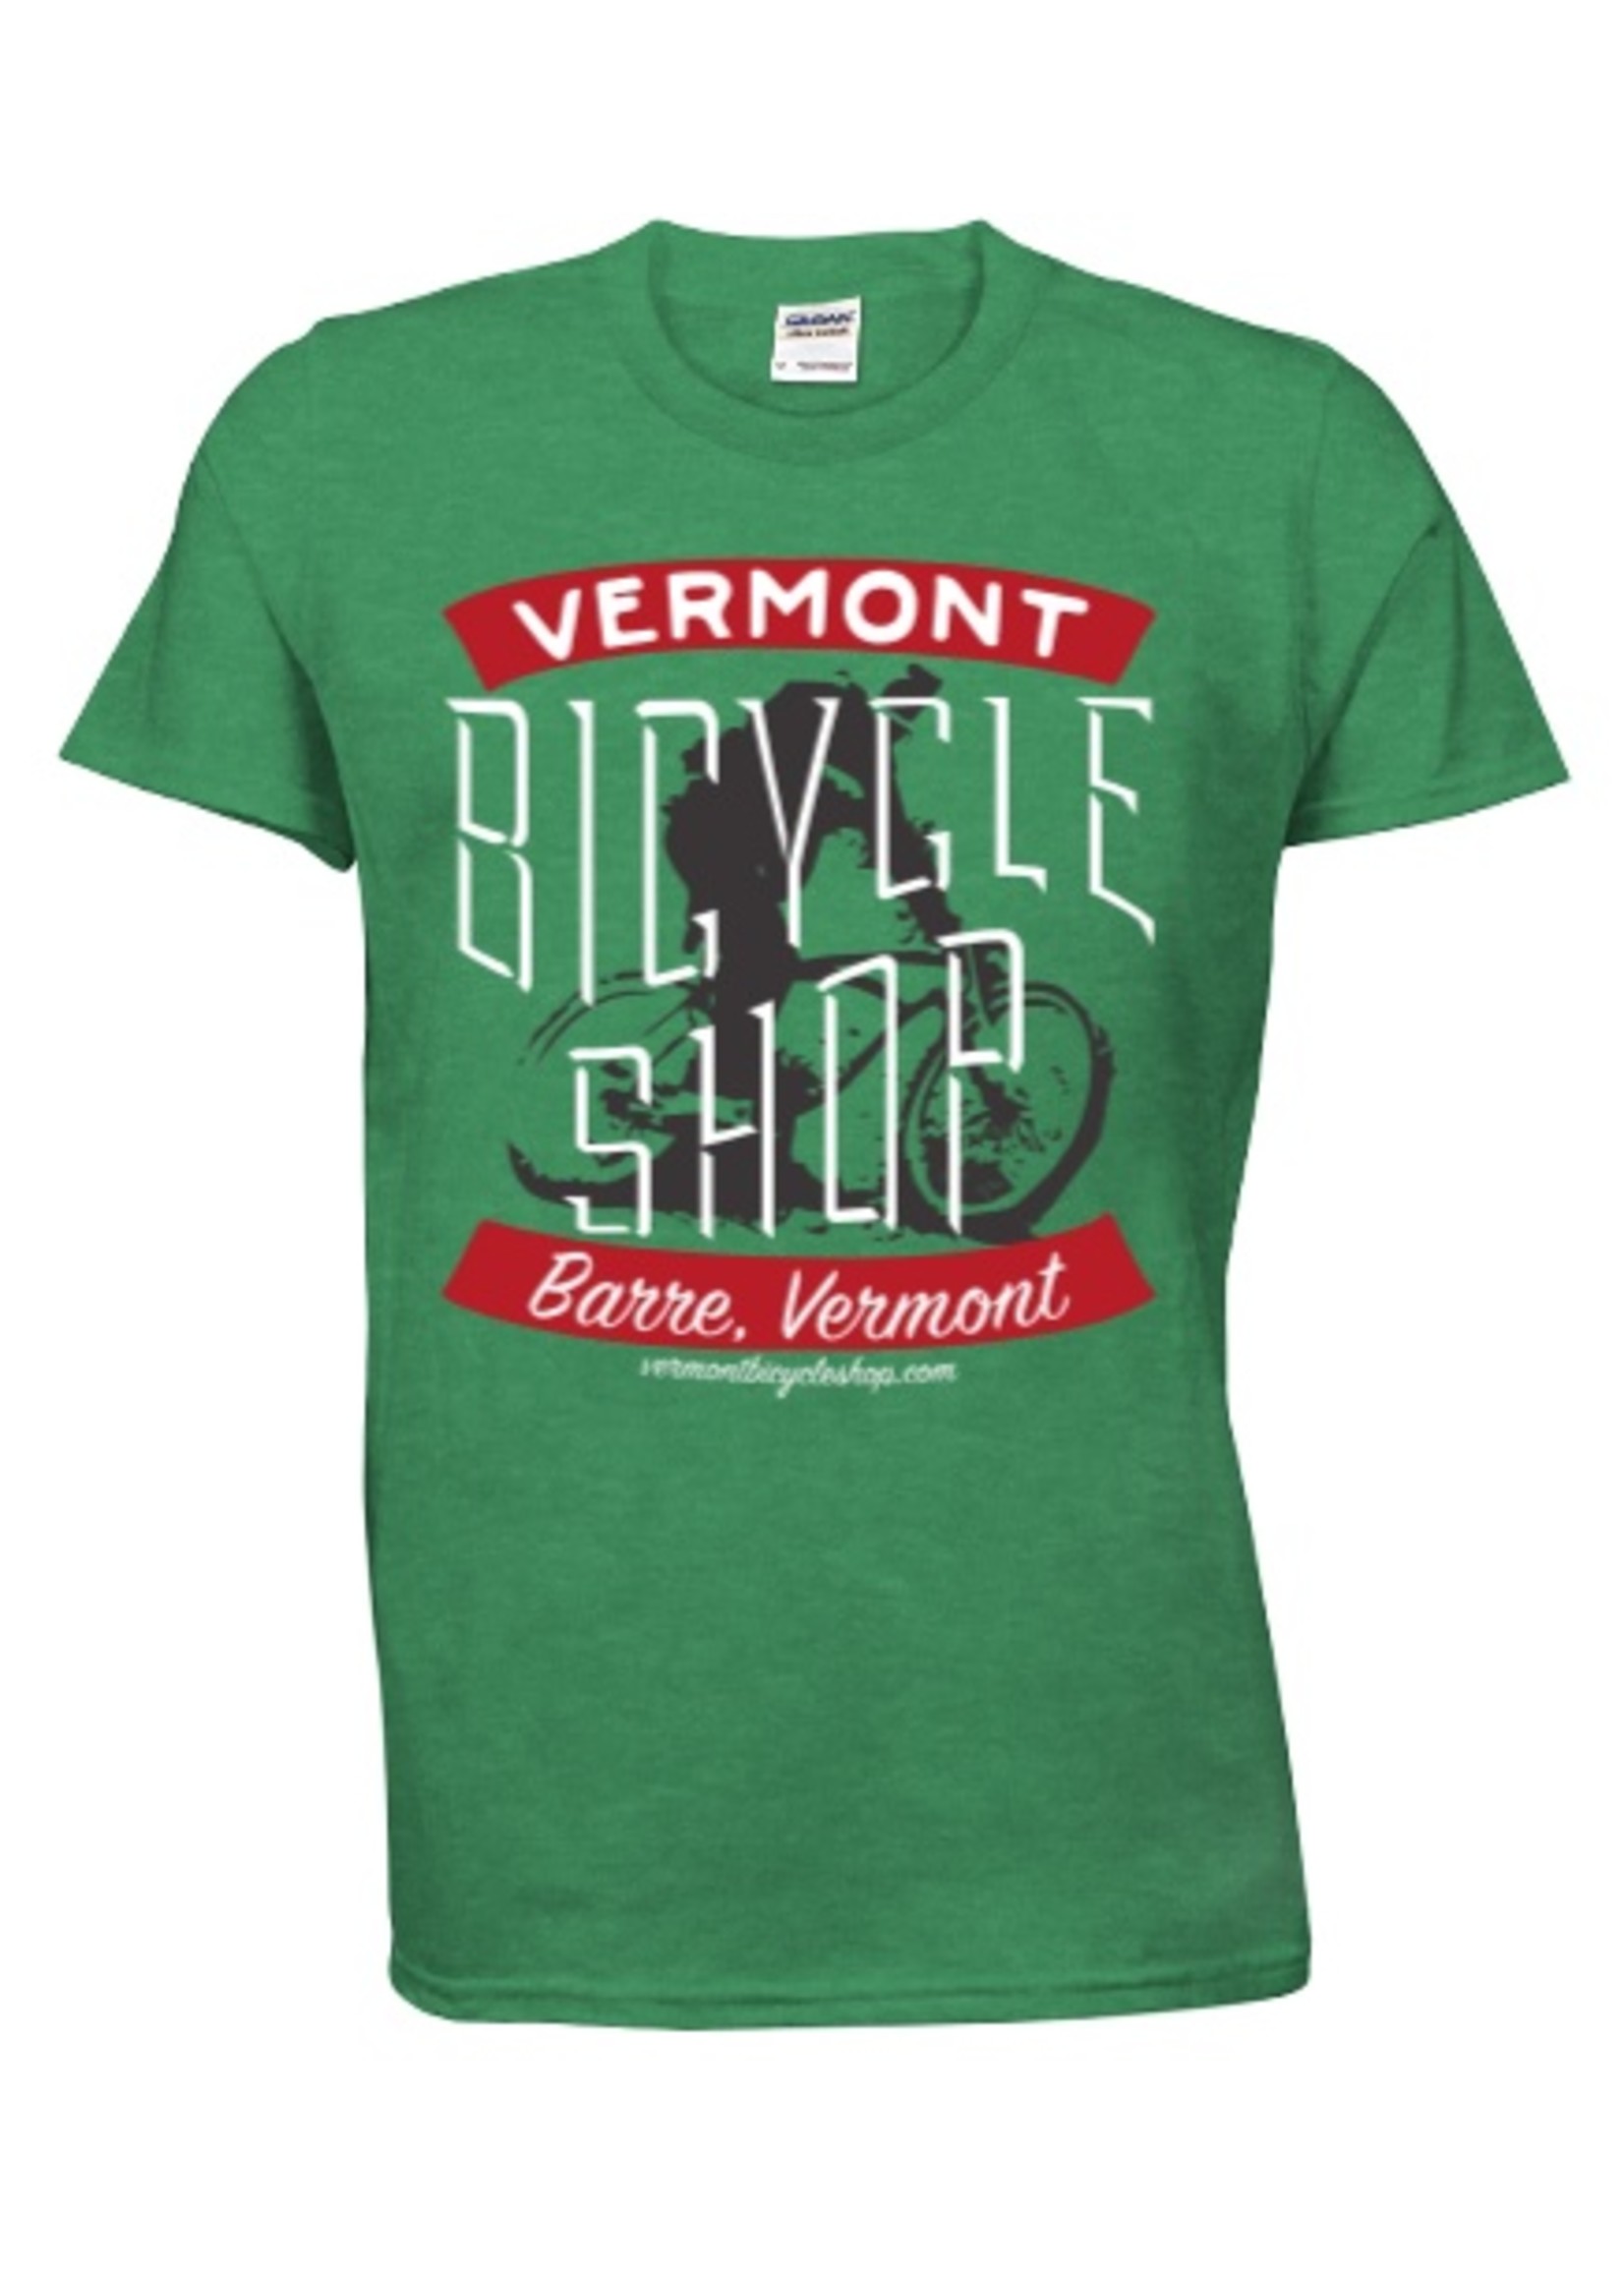 Vermont Bicycle Shop Vermont Bicycle Shop Klunker Shop T-Shirt